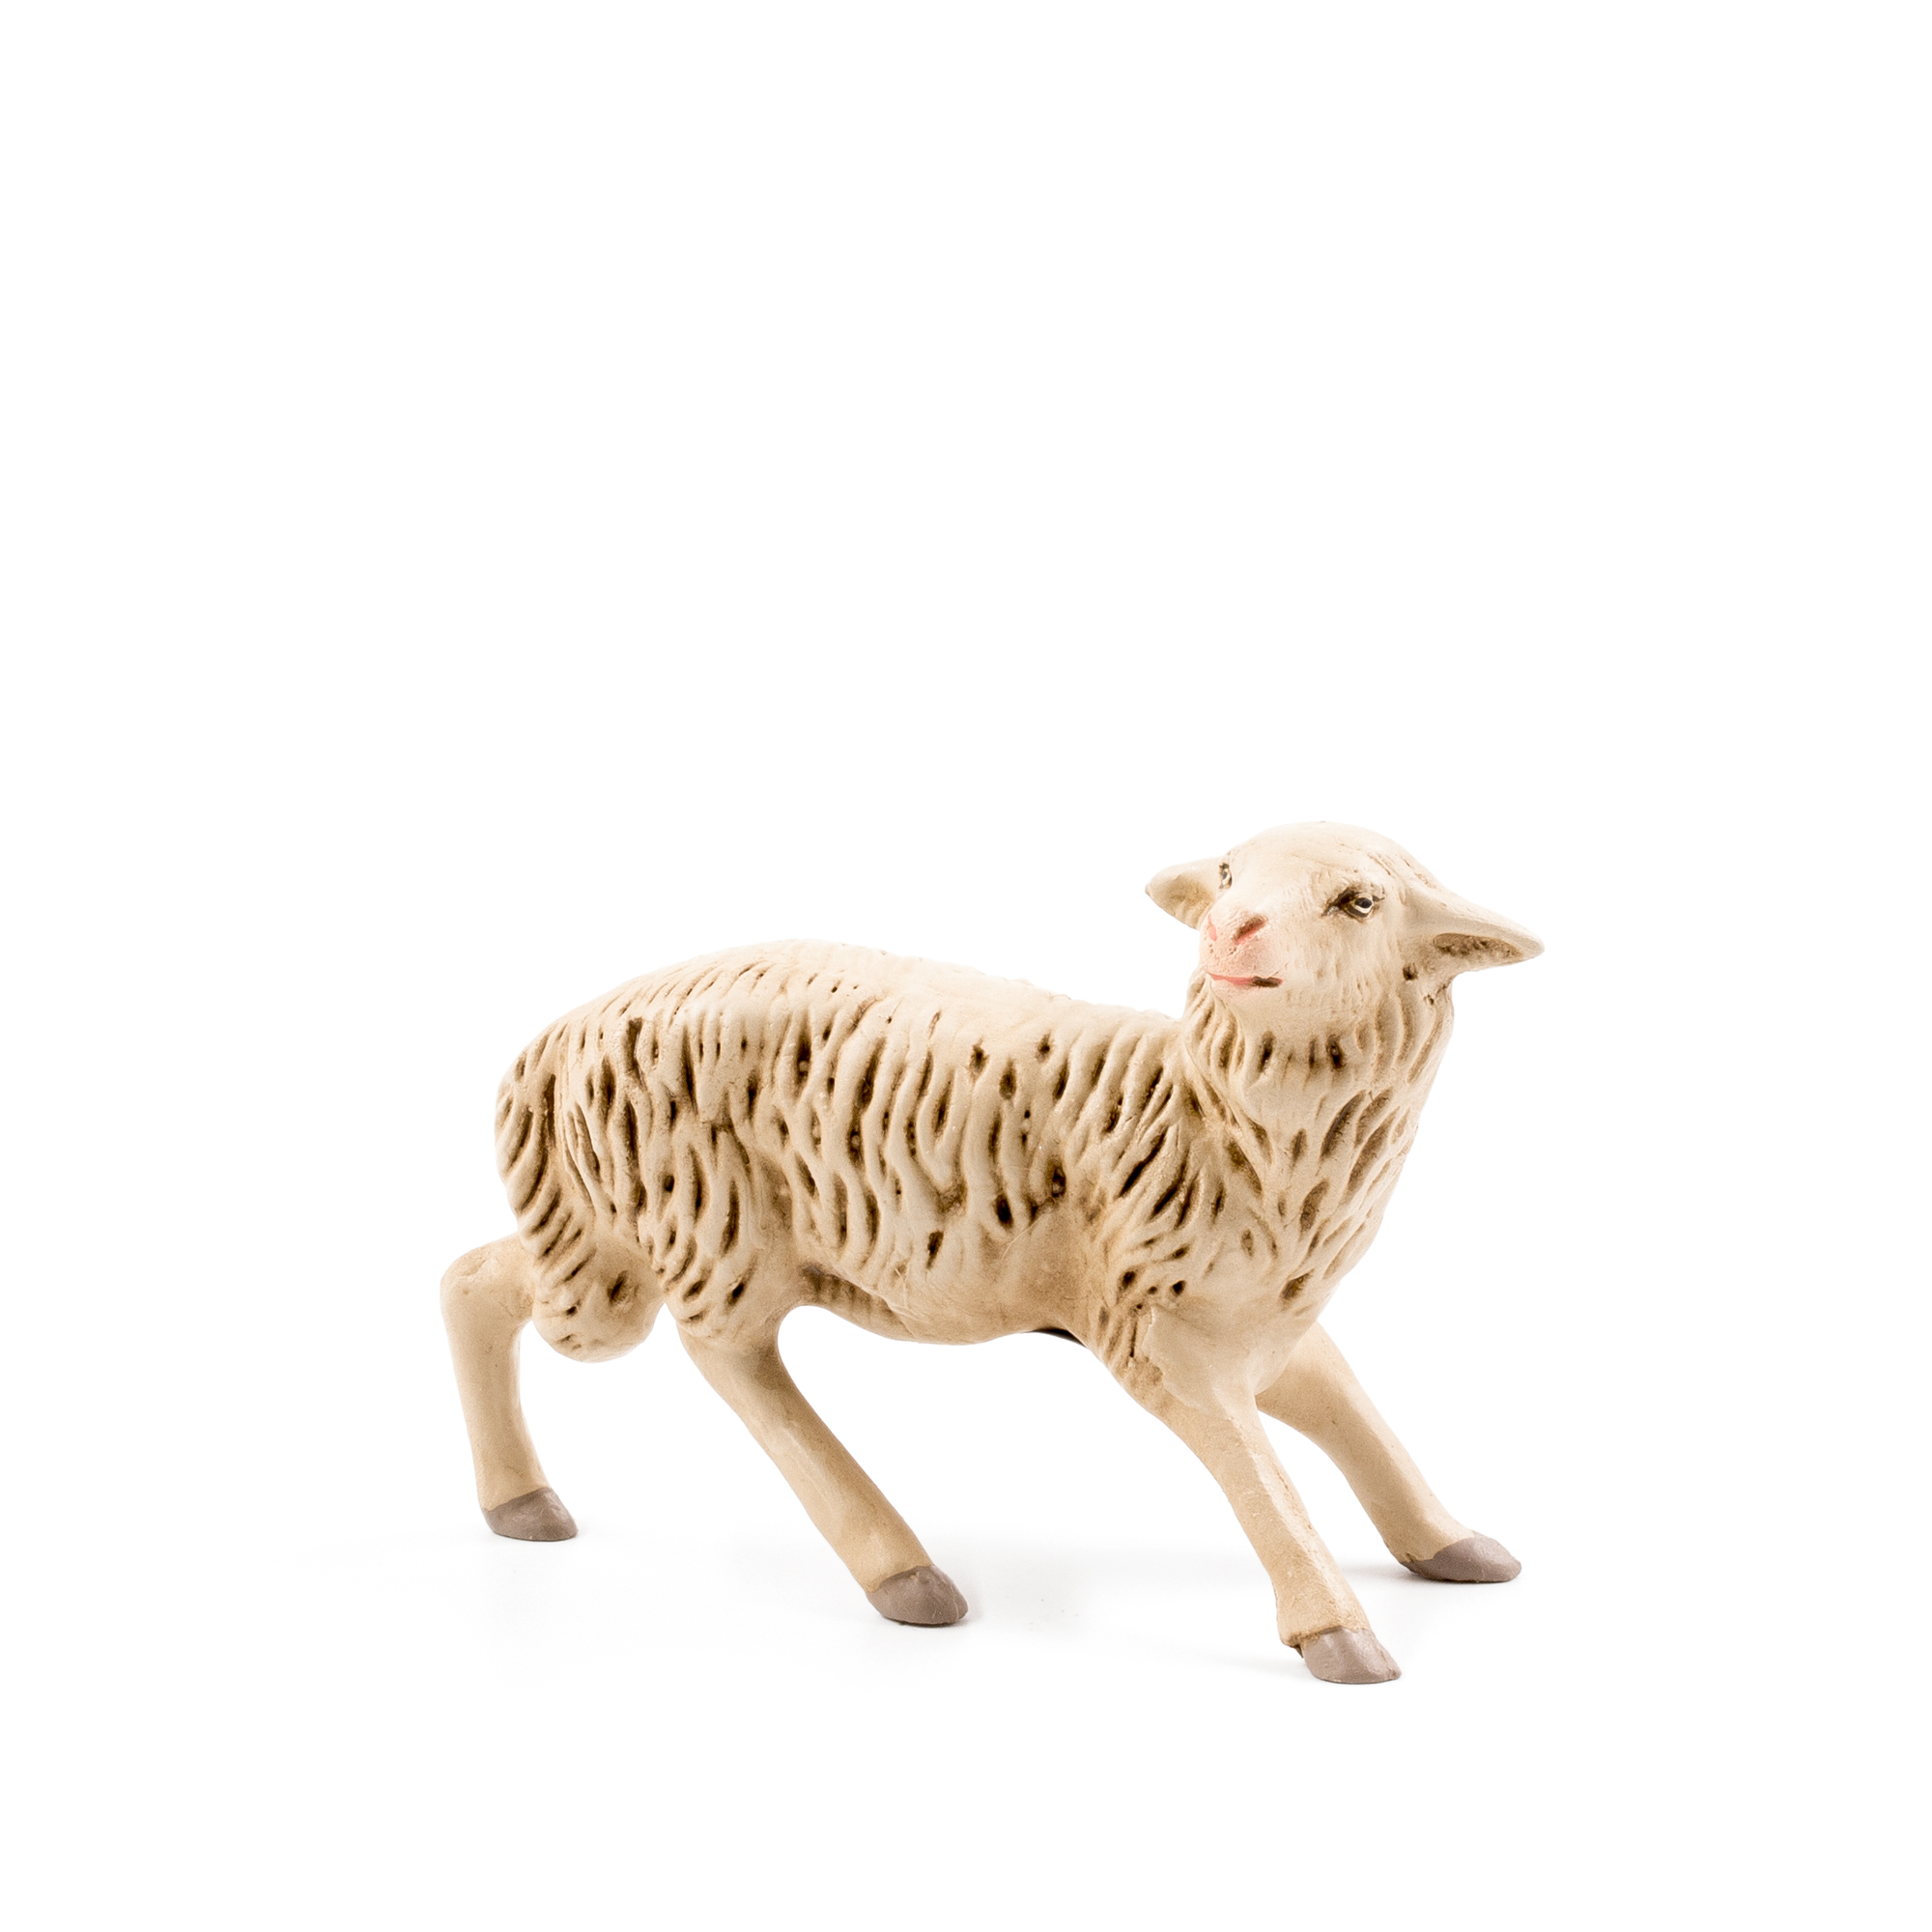 Schaf erschrocken, zu 17cm Figuren passend